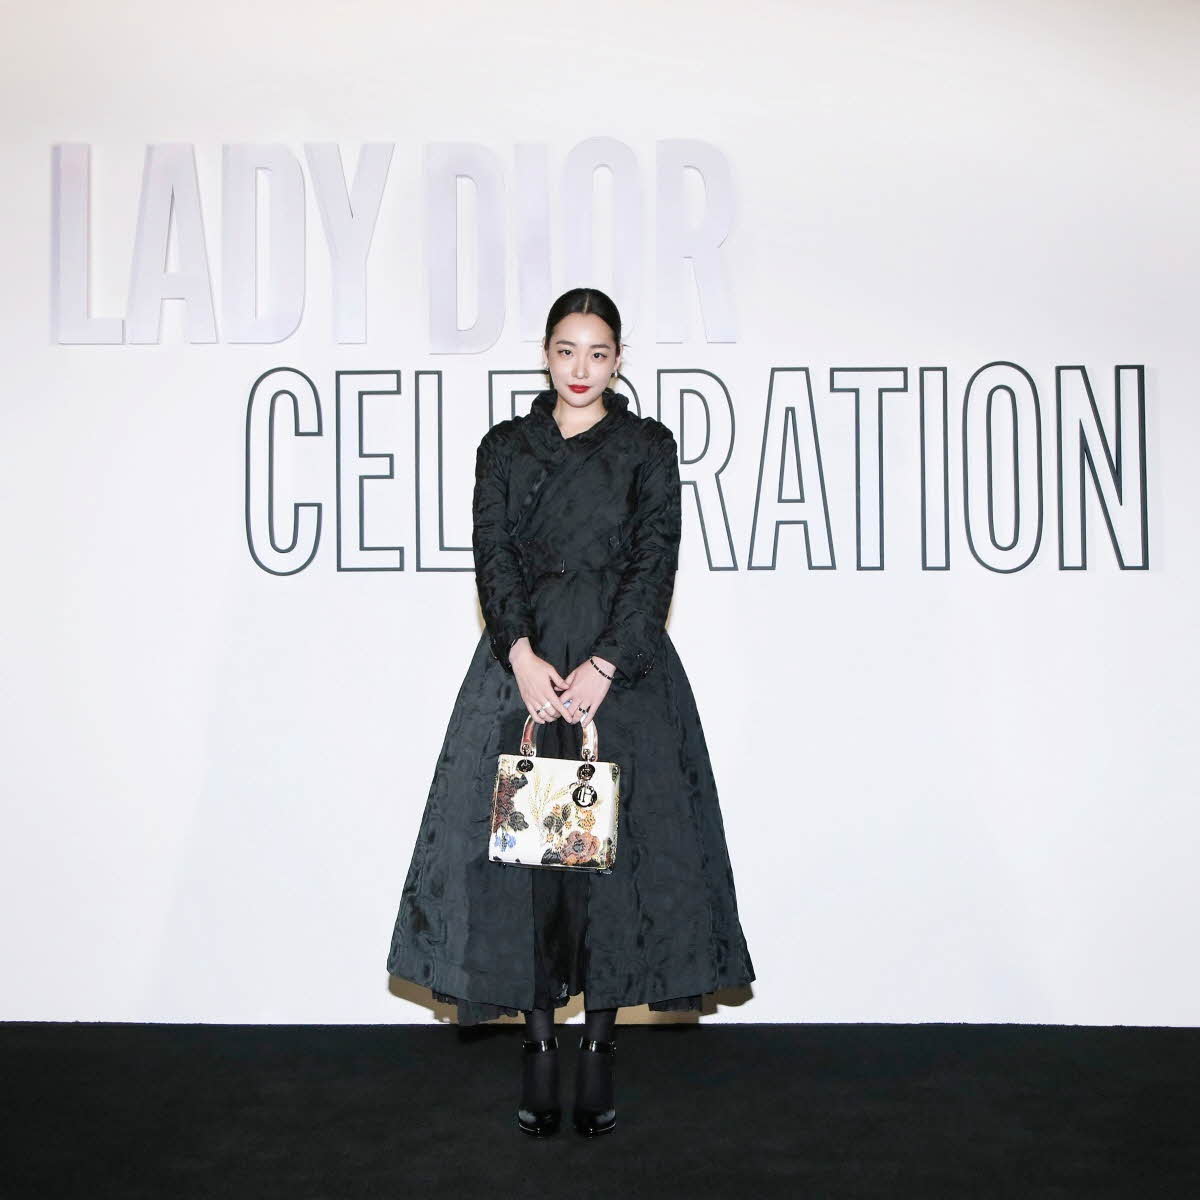 Christian Dior Lady Dior Celebration Seoul